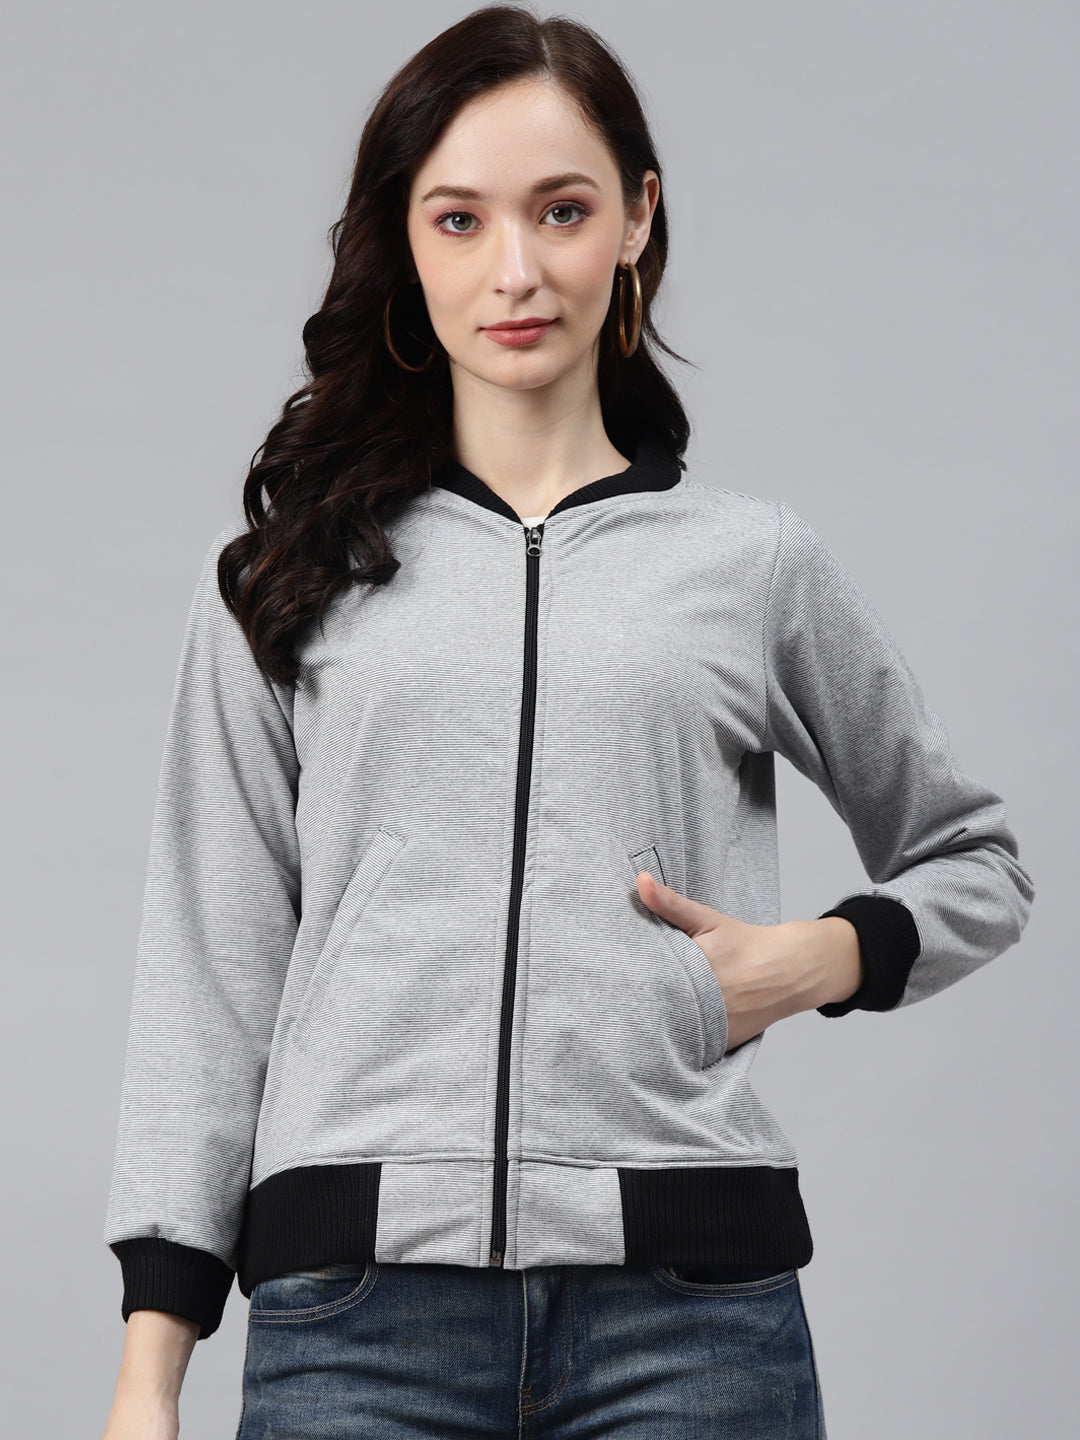 Grey Comfortable Sweatshirt With Pockets